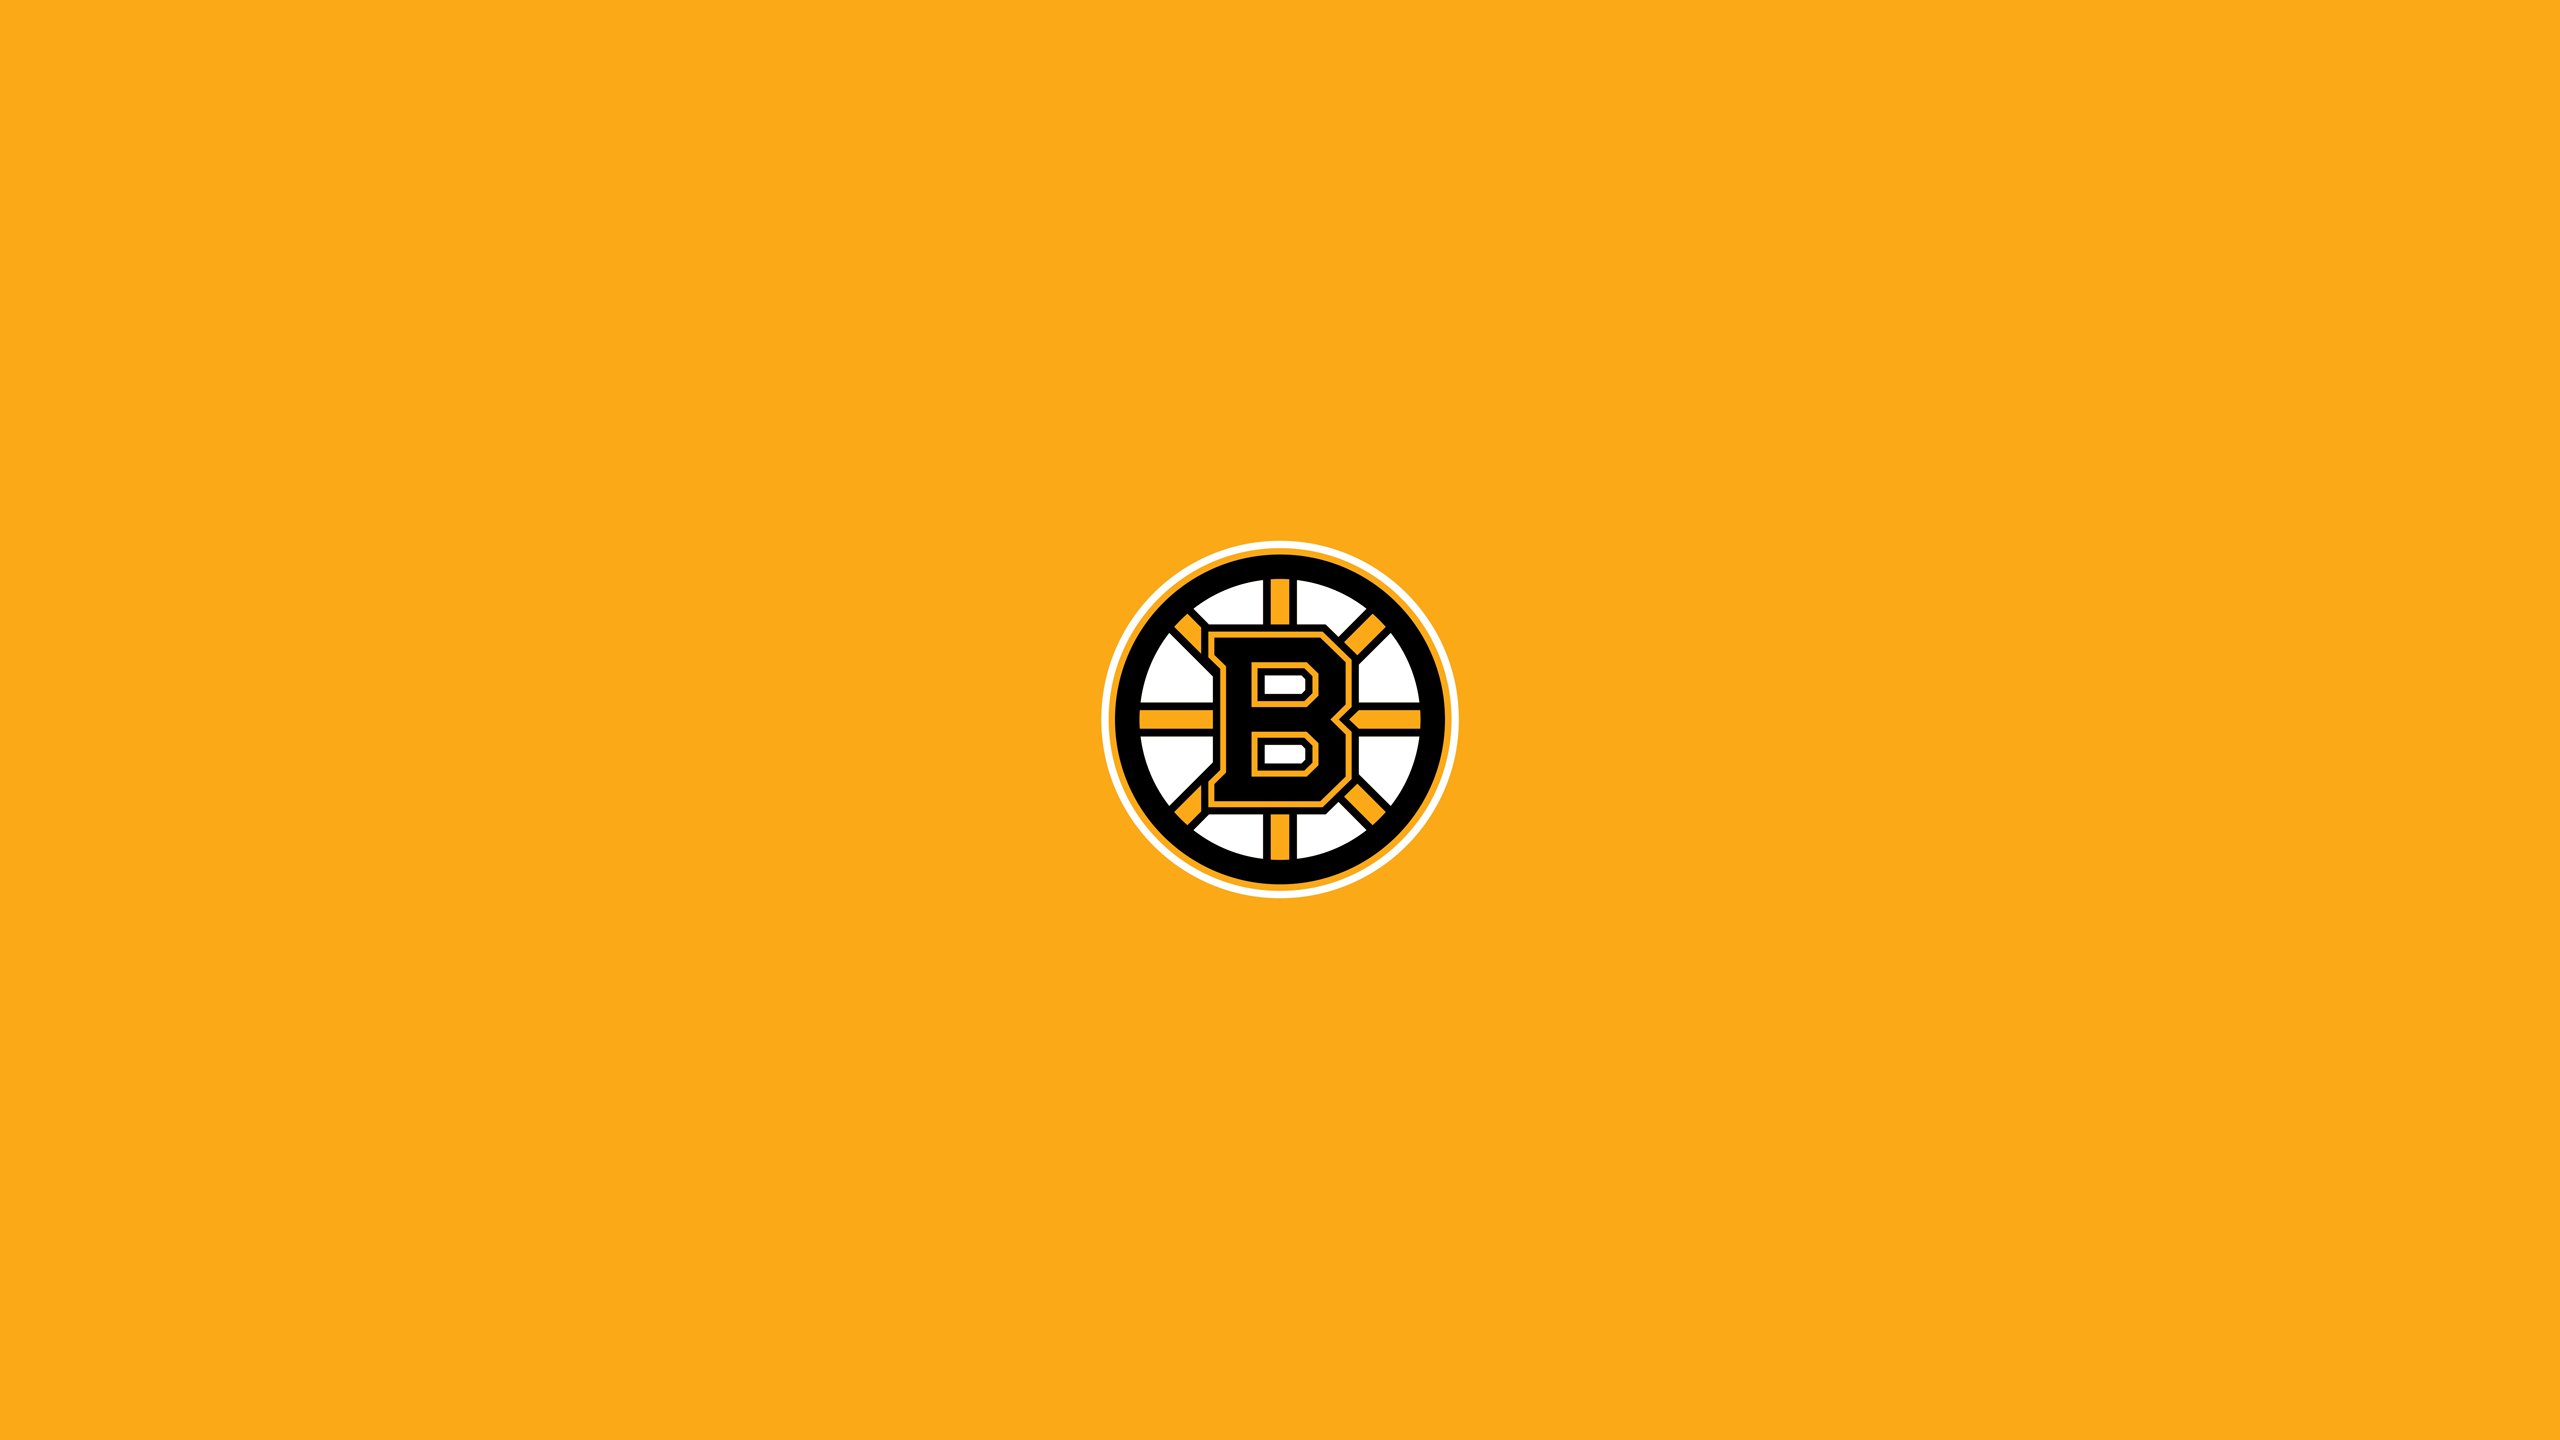 BOSTON BRUINS nhl hockey (3) wallpaper | 2560x1440 | 336433 ...